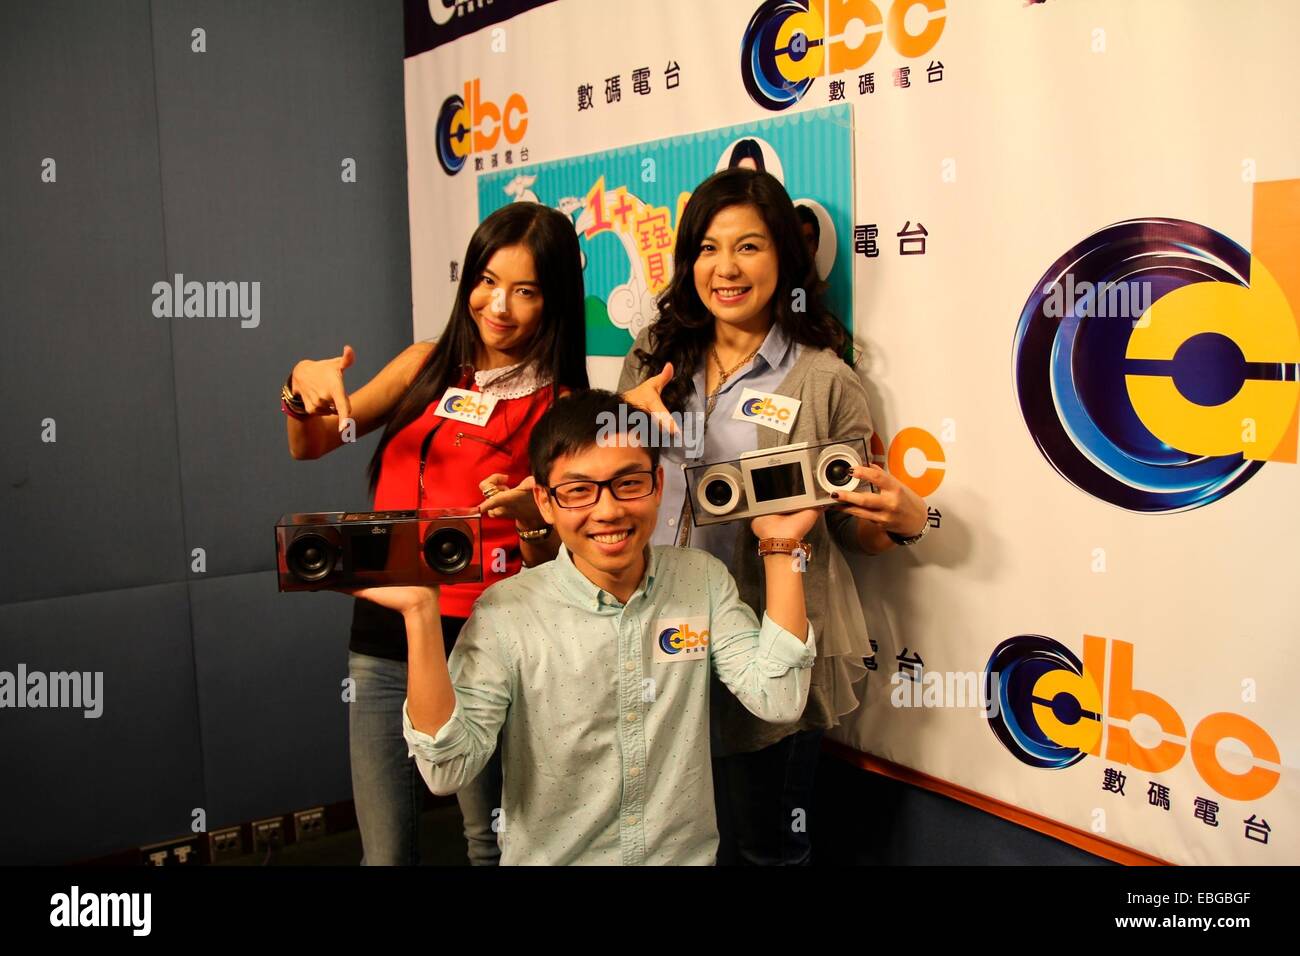 Hong Kong Cina. 27 Nov, 2014. Cecilia Cheung riceve l'intervista di un programma radio di Hong Kong Cina il 27 novembre 2014. © TopPhoto/Alamy Live News Foto Stock